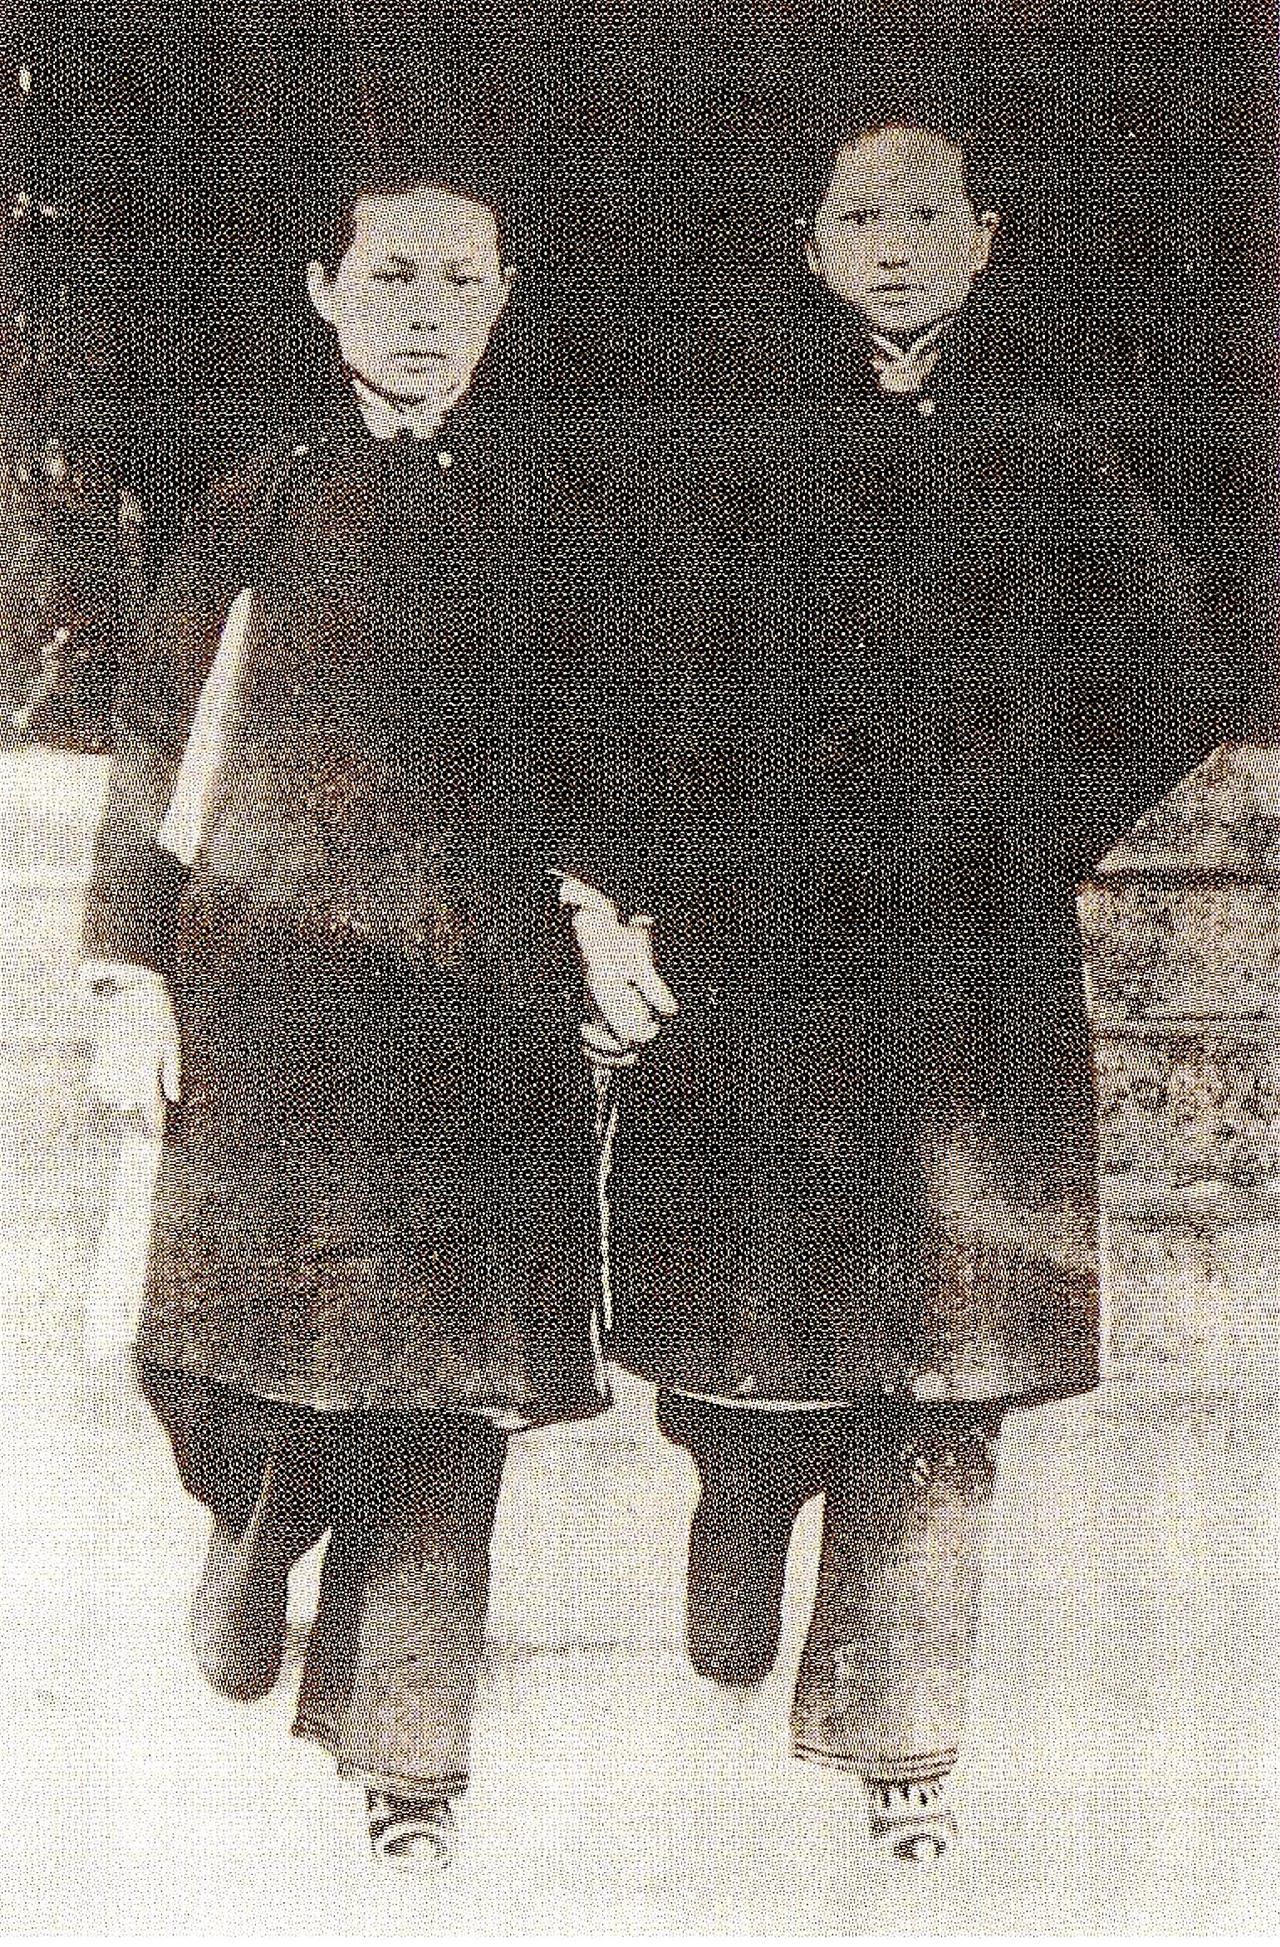 Sun Yat Sen's daughters, Sun Yan and Sun Wan, studied in St George's in 1911